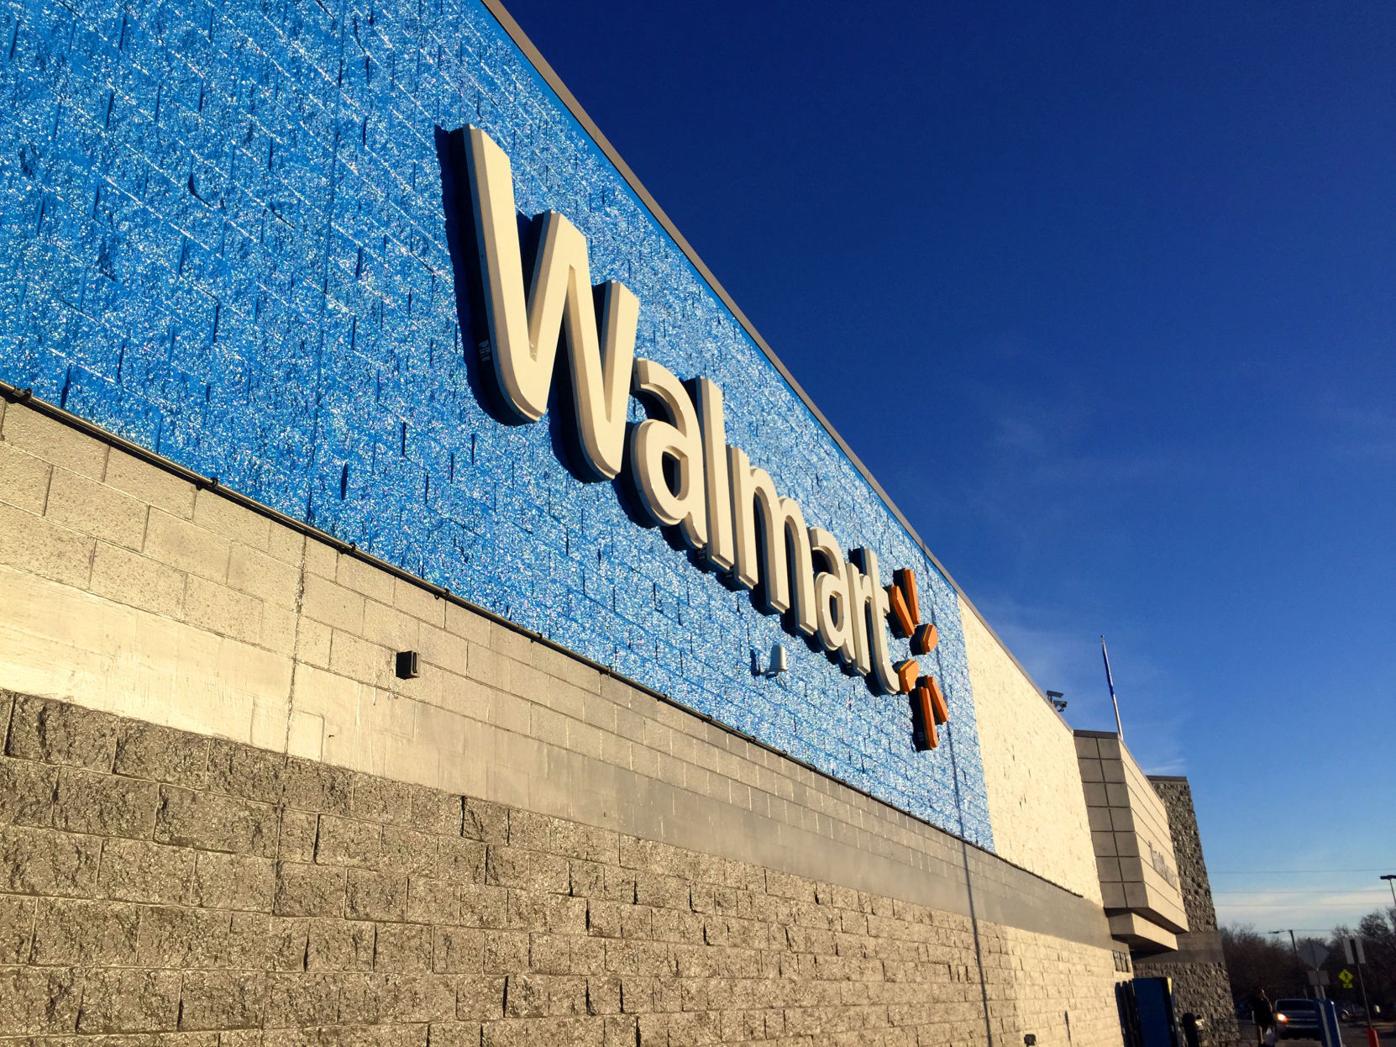 Walmart Customer Shows No More Self-Checkout as Guards Patrol